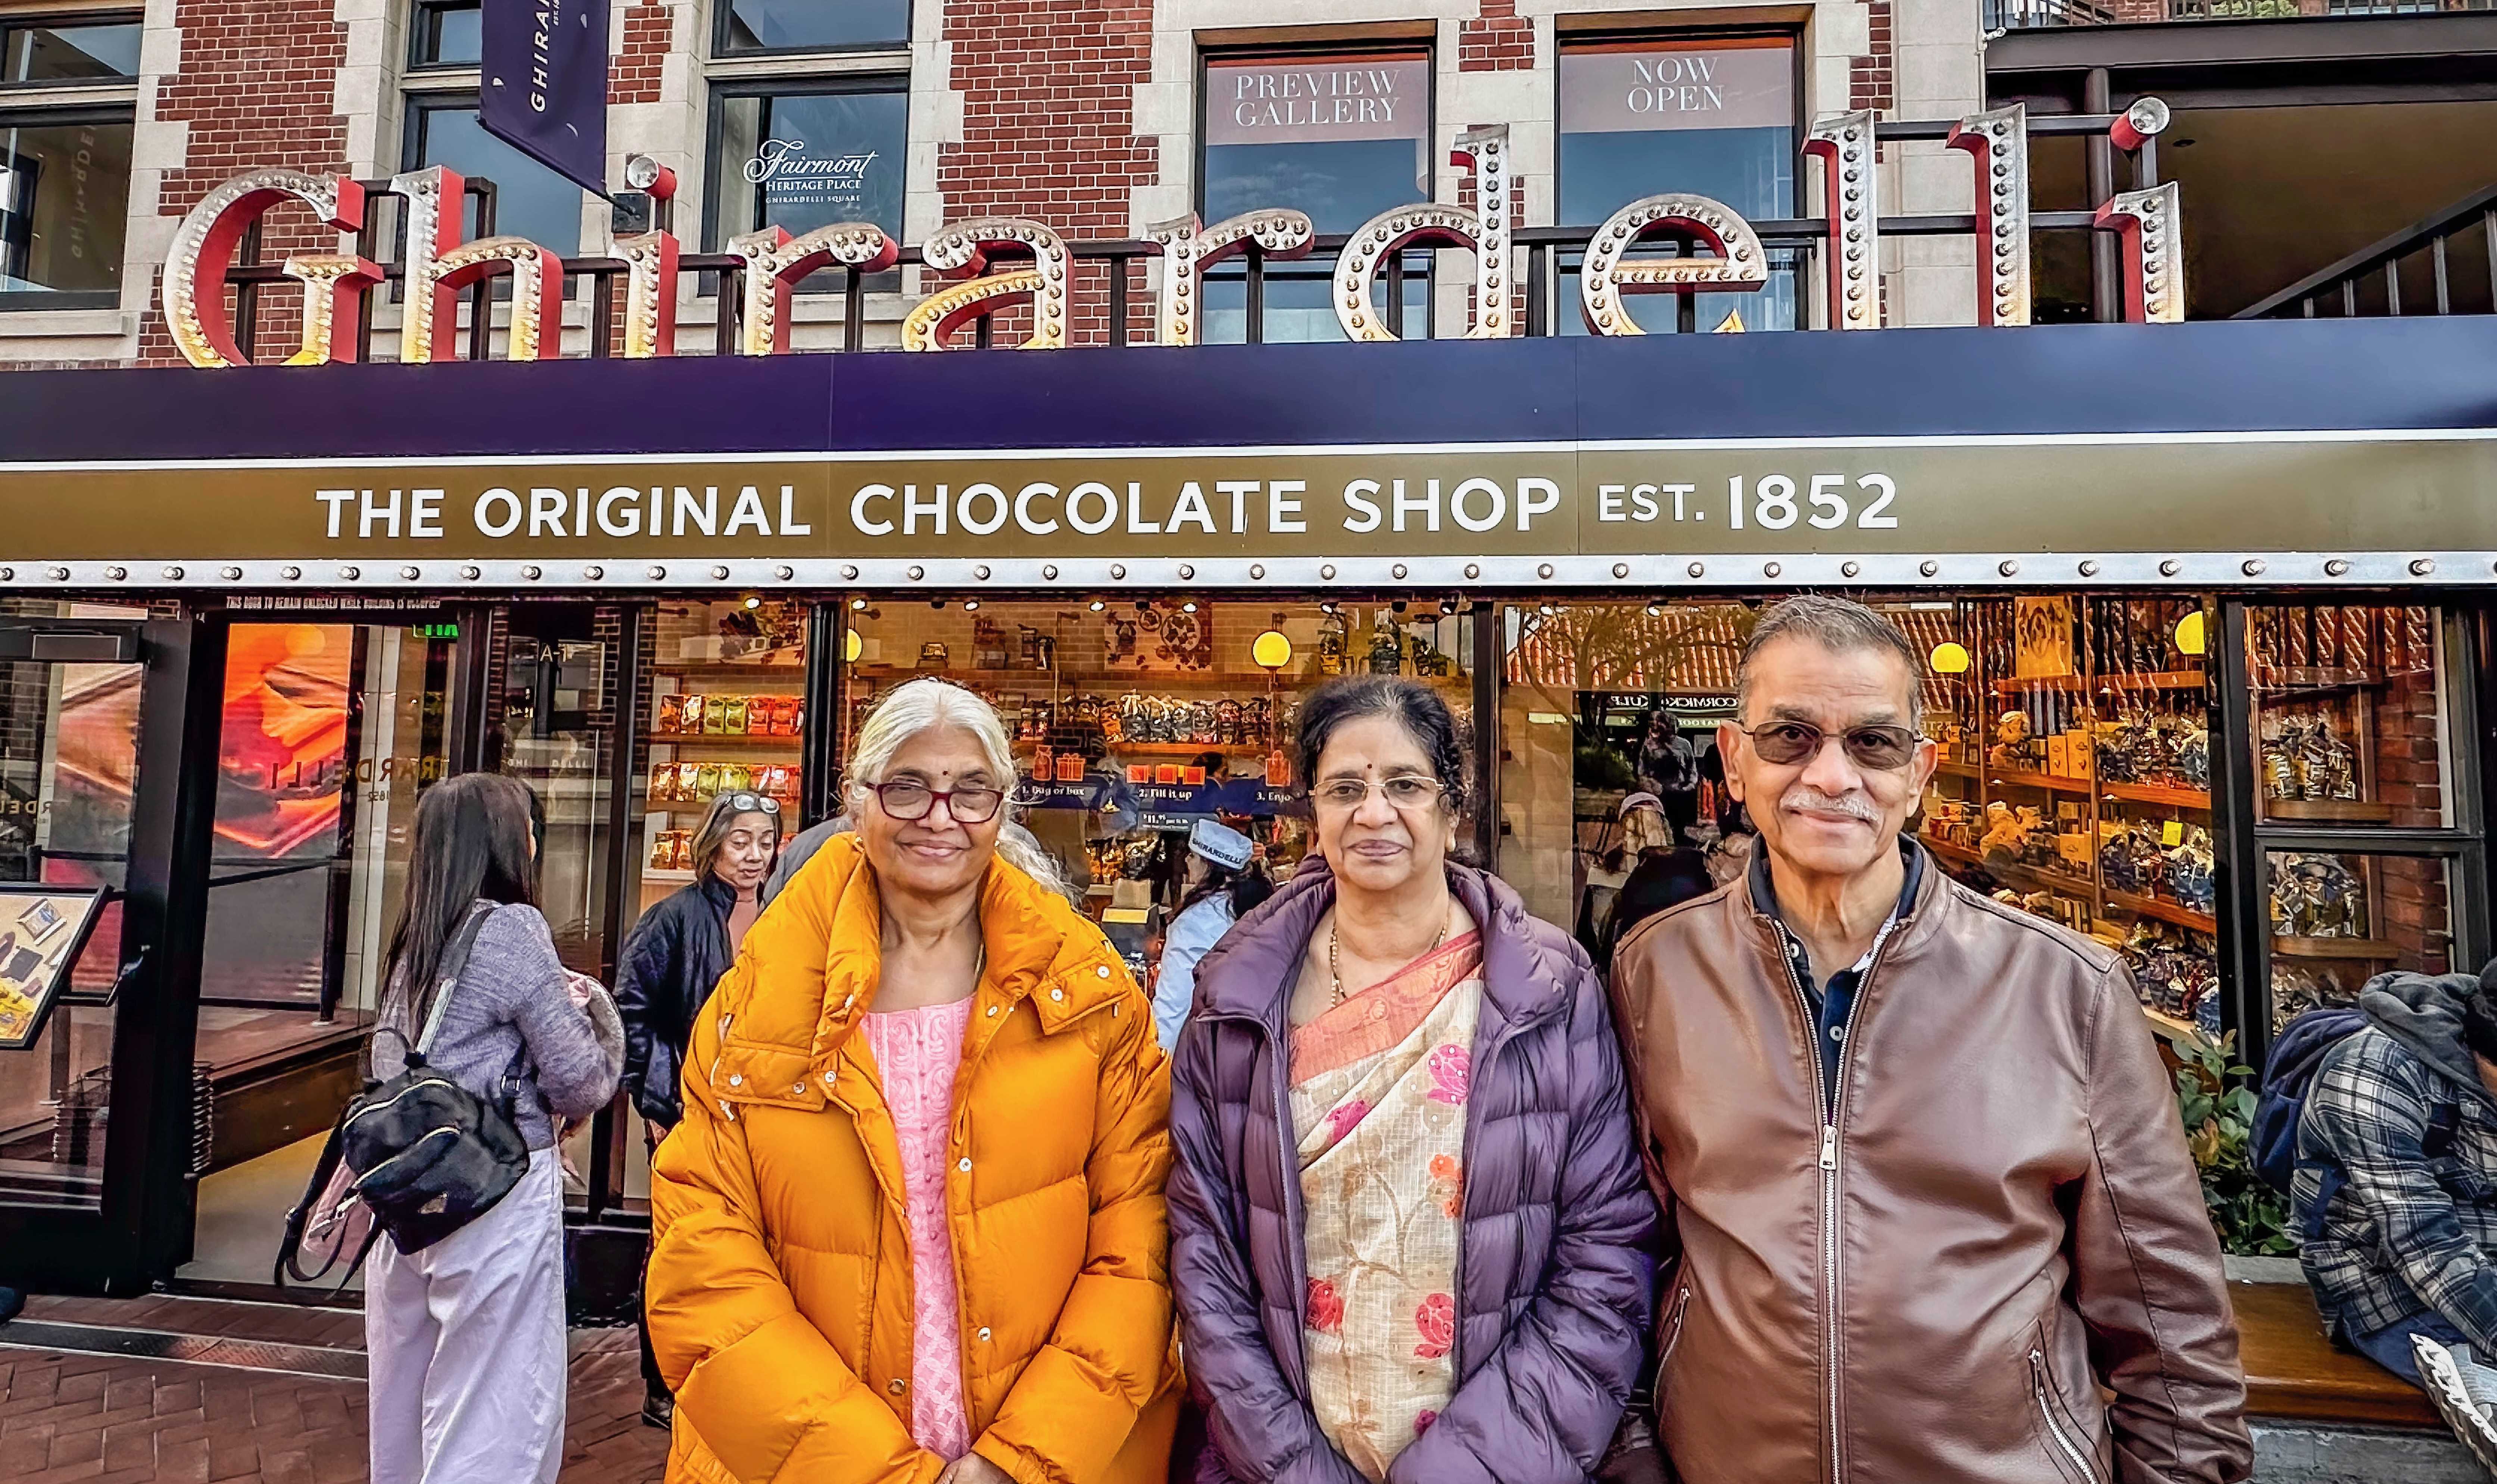 <b><i>Ramana Sista's wife Kamala Sista (left), his brother's wife Tulasi Sista and his brother Rao Sista in front of Ghirardelli Chocolate Shop (Pic credit: Phani Sista)</i></b>